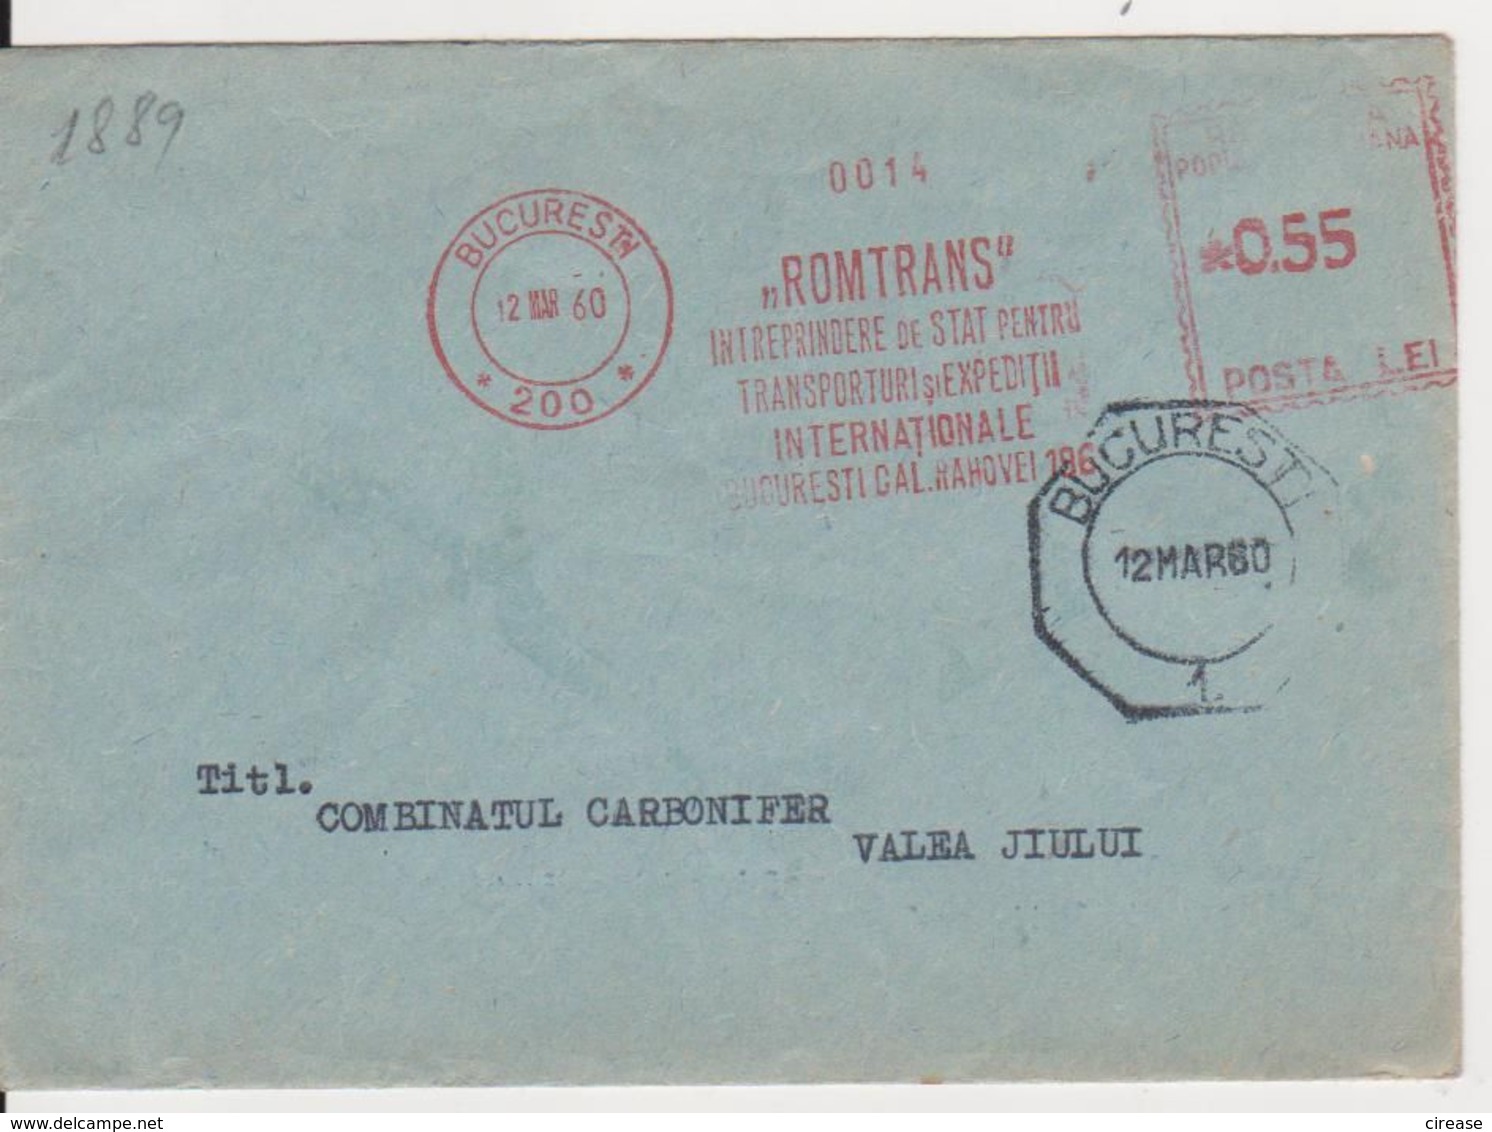 BUCURESTI AMONT 0,55, ROMTRANS INTERNATIONAL TRANSPORT RED MACHINE ATM STAMPS, ROMANIA 1960 - Máquinas Franqueo (EMA)